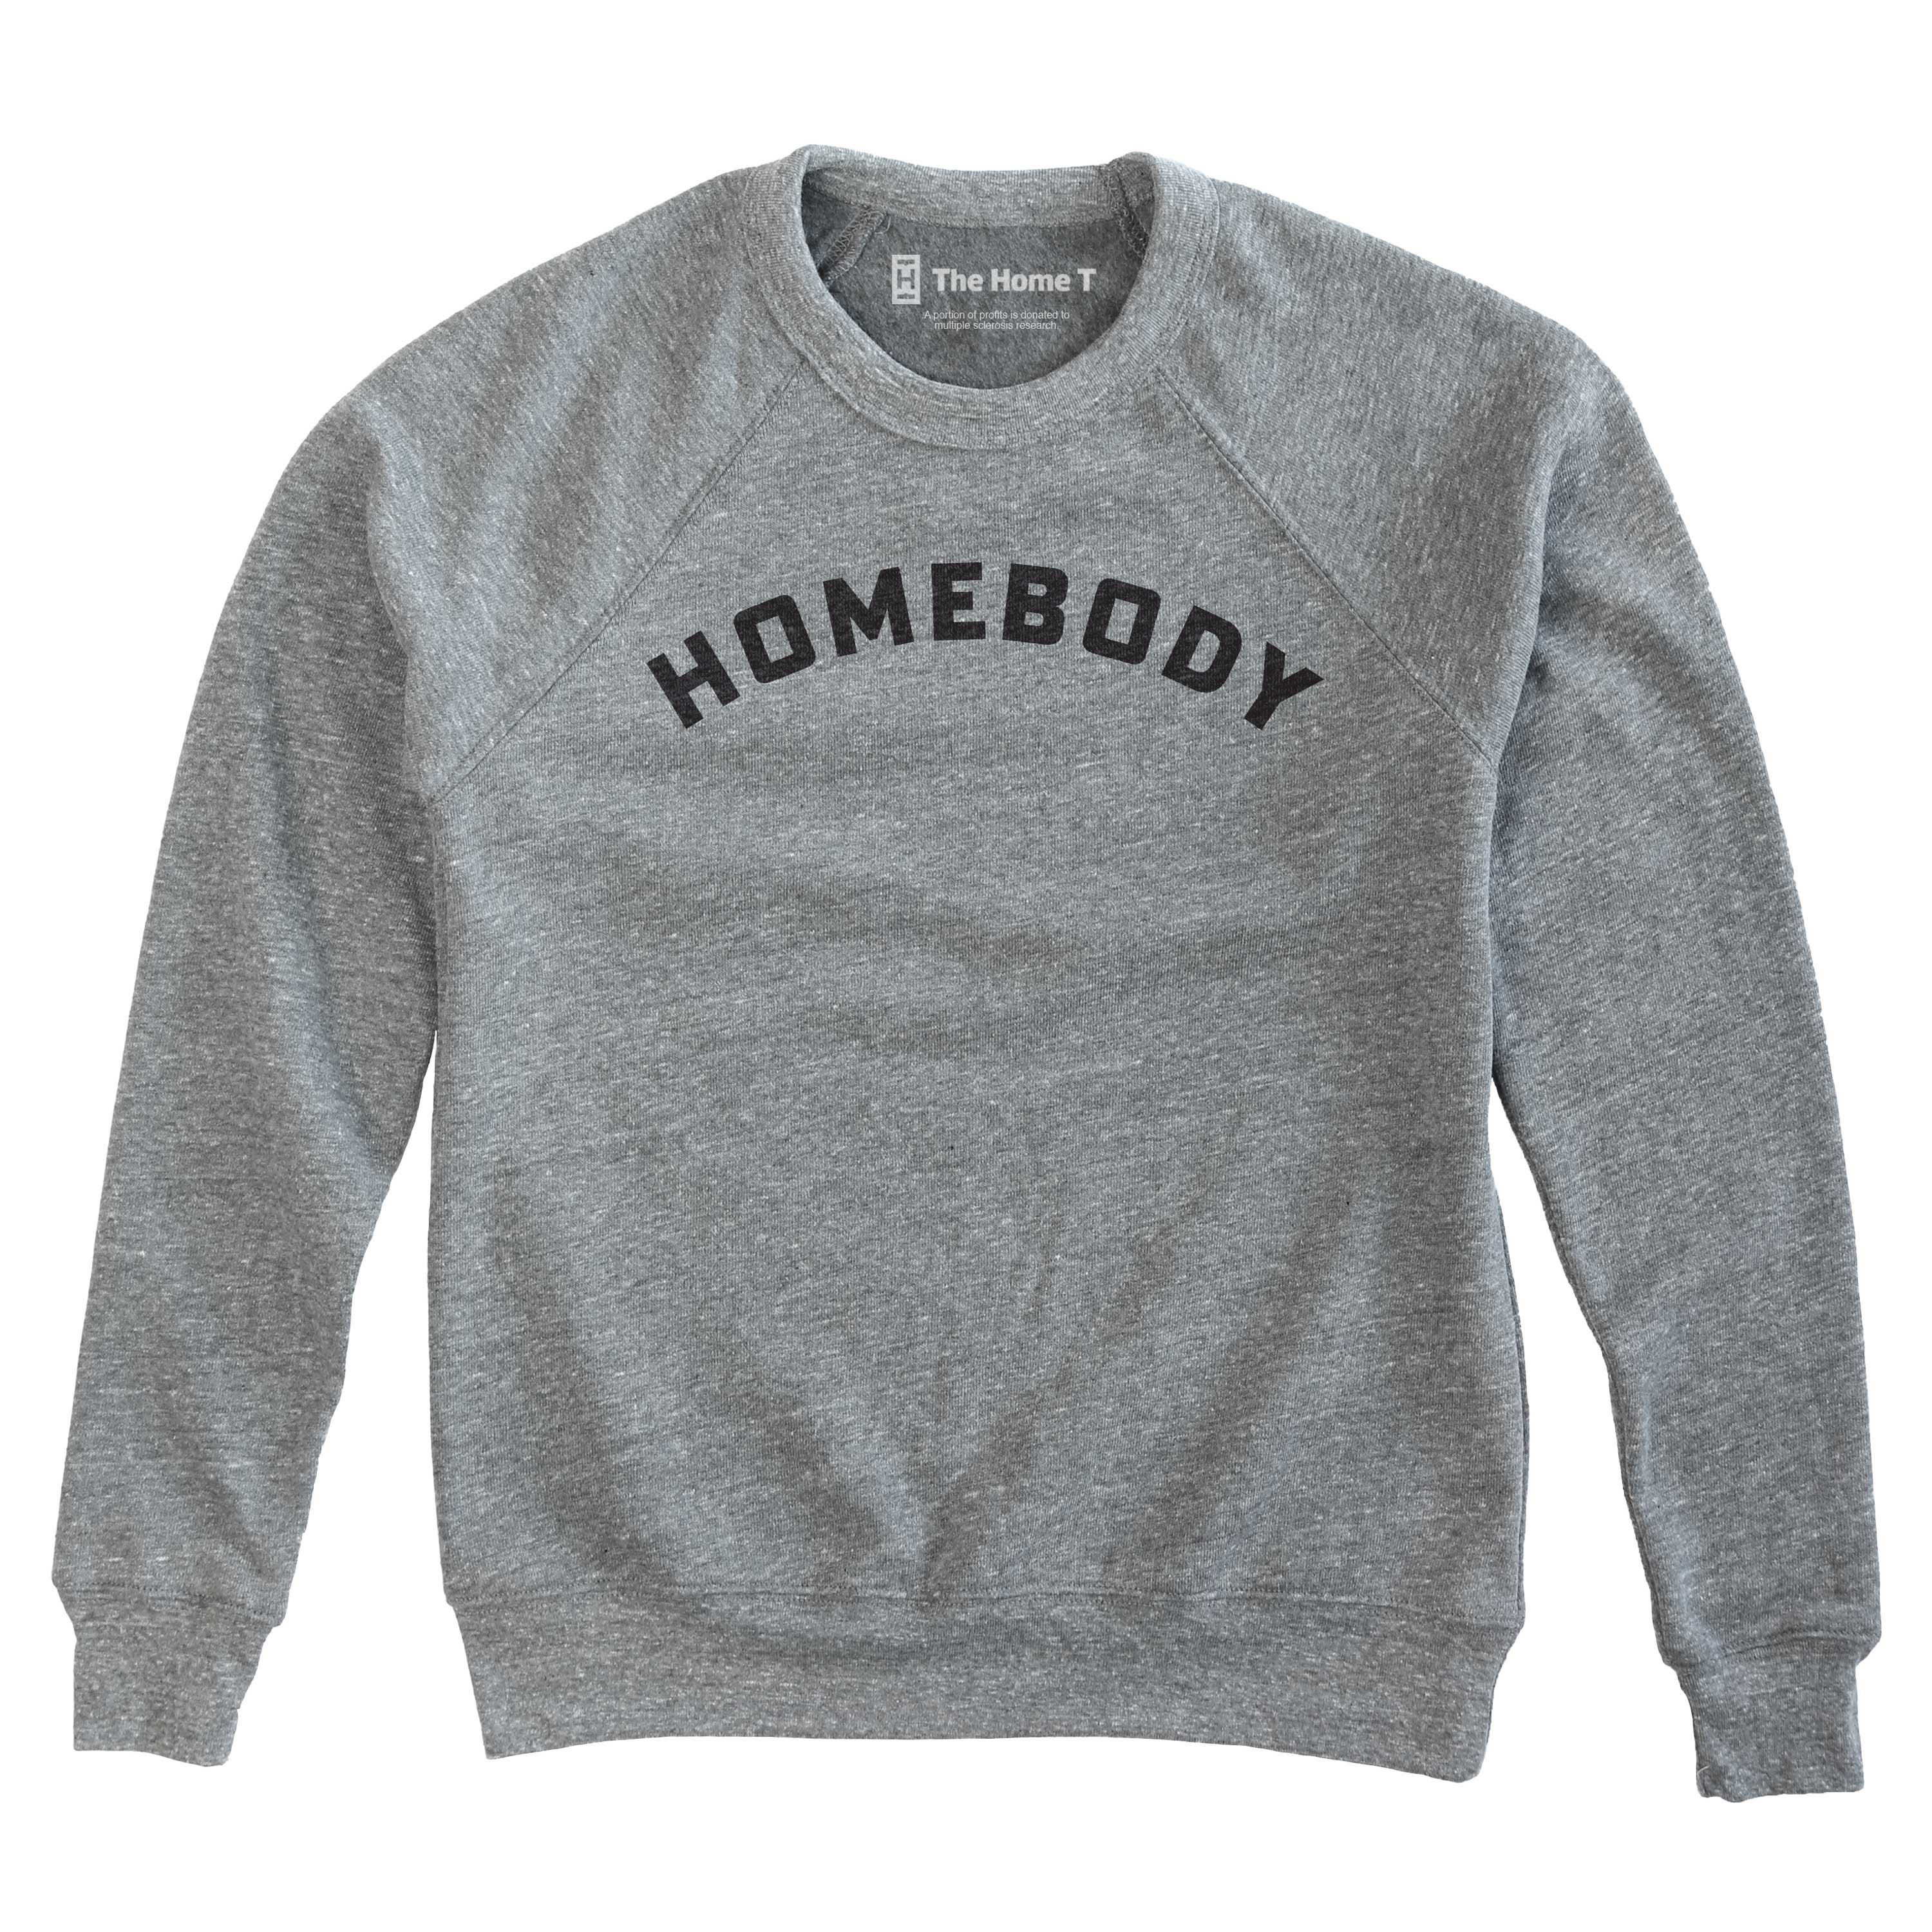 Homebody athletic grey sweatshirt